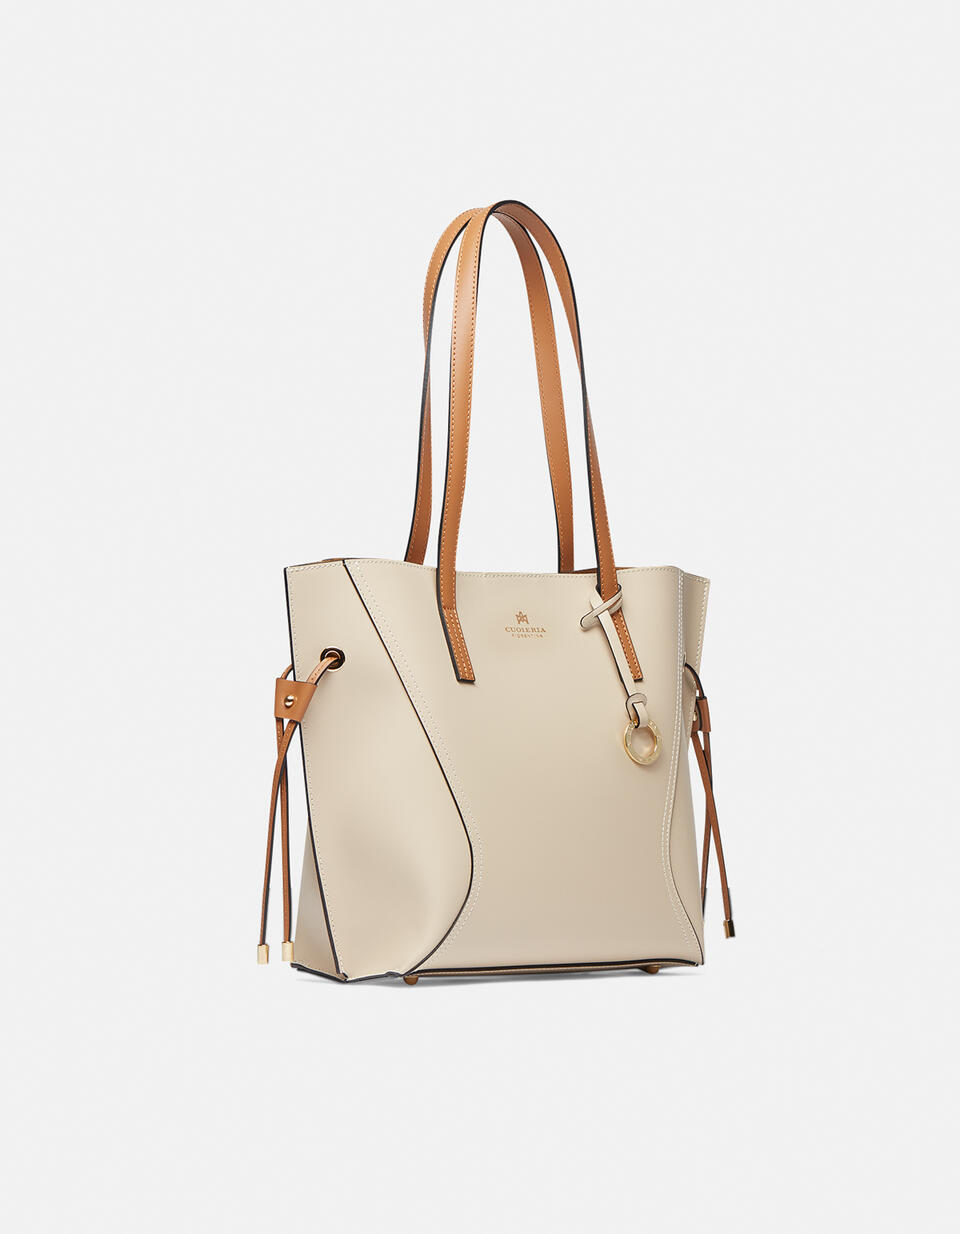 shopping bag in calf leather - SHOPPING - WOMEN'S BAGS | bags BEIGECUOIO - SHOPPING - WOMEN'S BAGS | bagsCuoieria Fiorentina